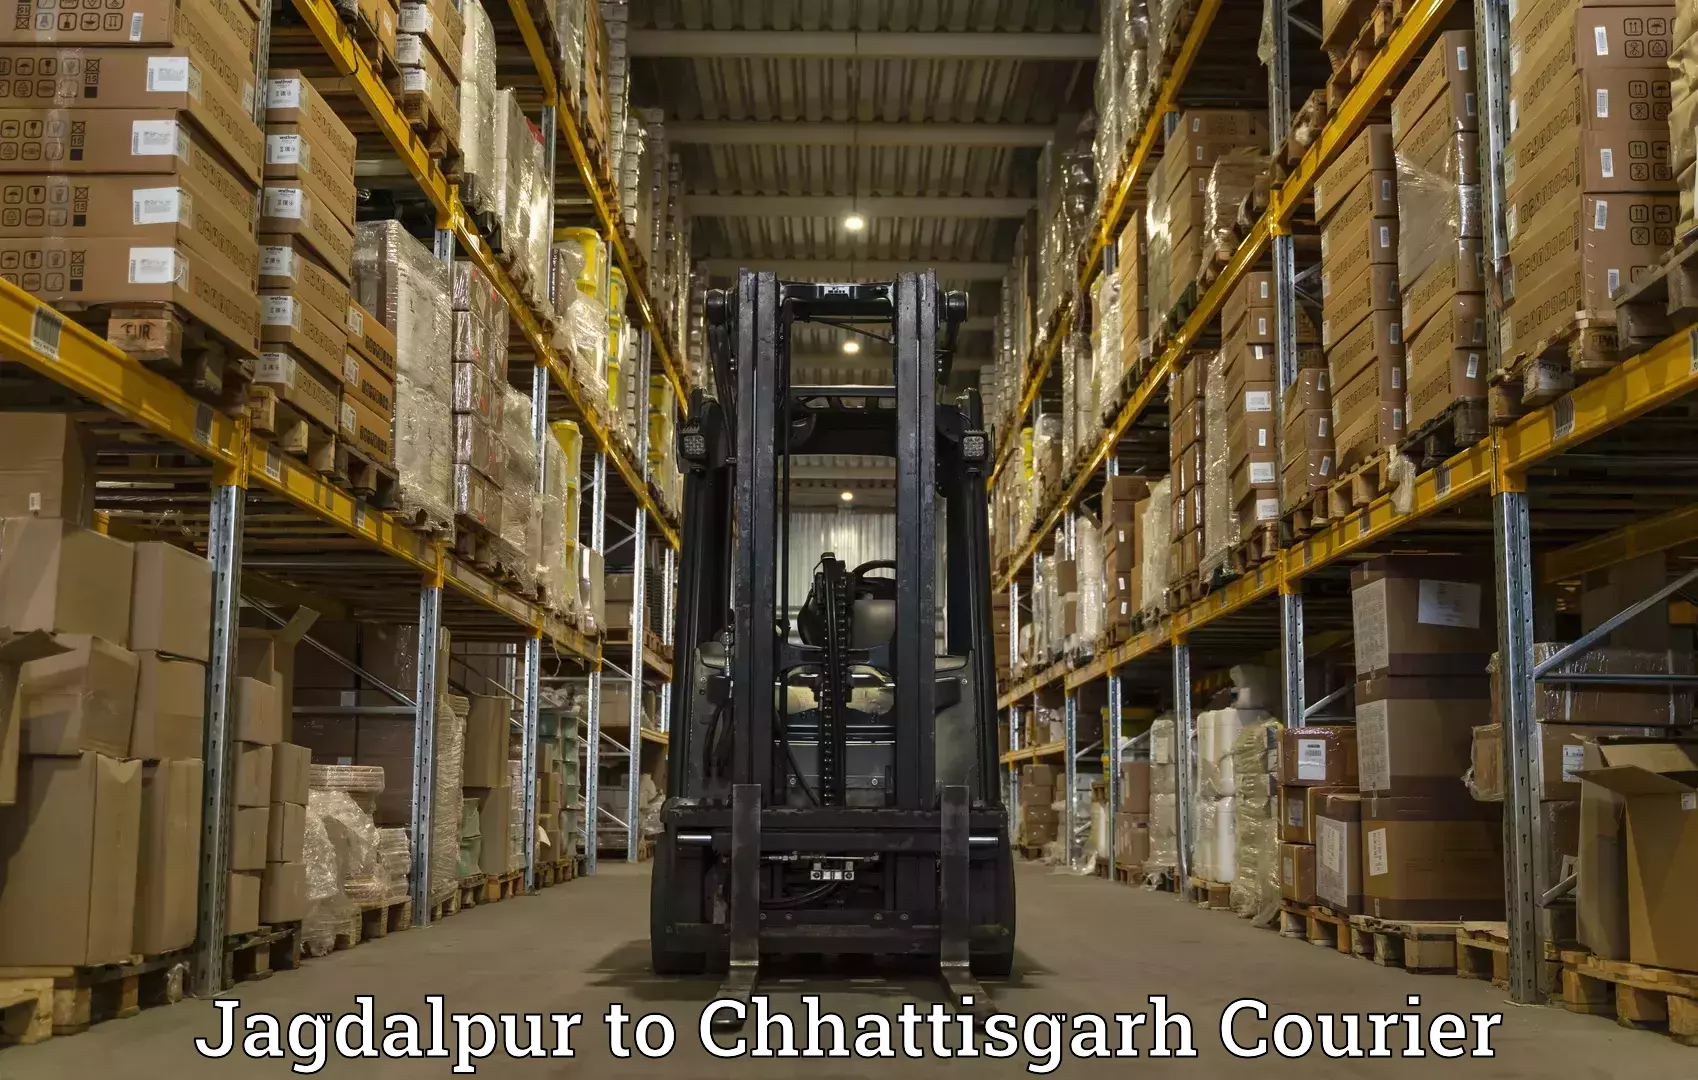 Efficient freight service Jagdalpur to Raigarh